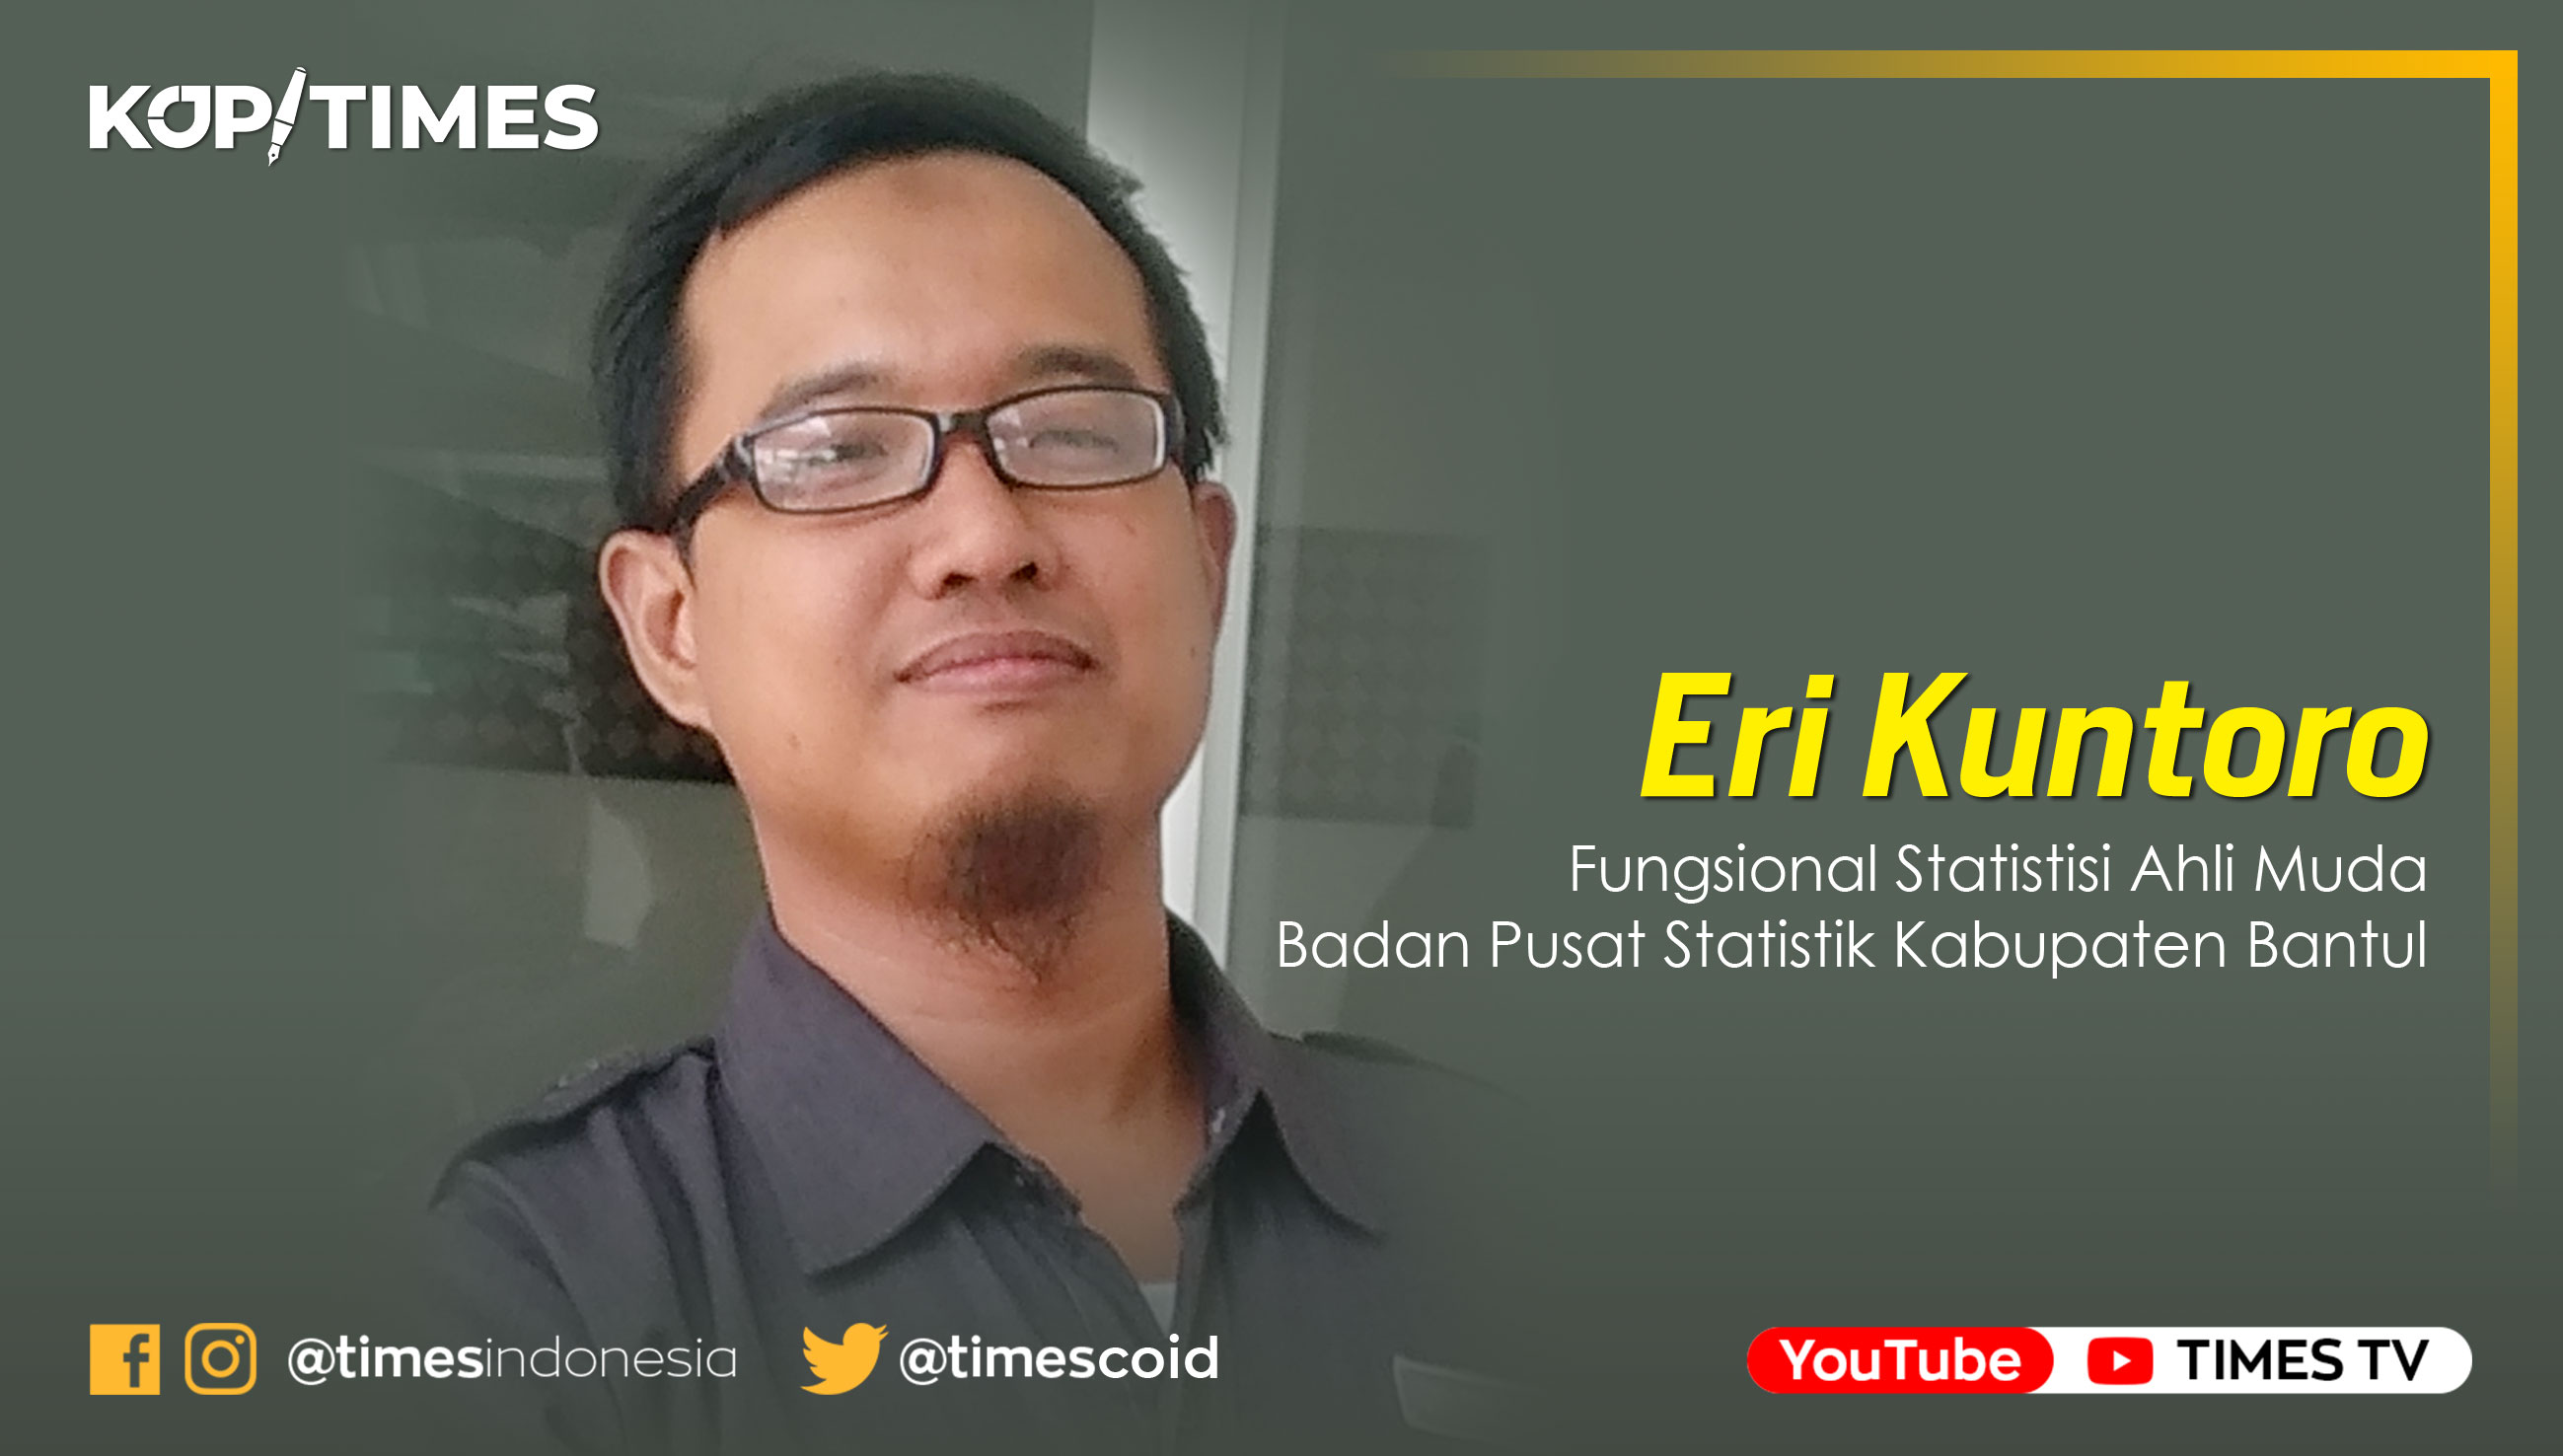 Eri Kuntoro SST, M.Si, Fungsional Statistisi Ahli Muda; Badan Pusat Statistik Kabupaten Bantul.